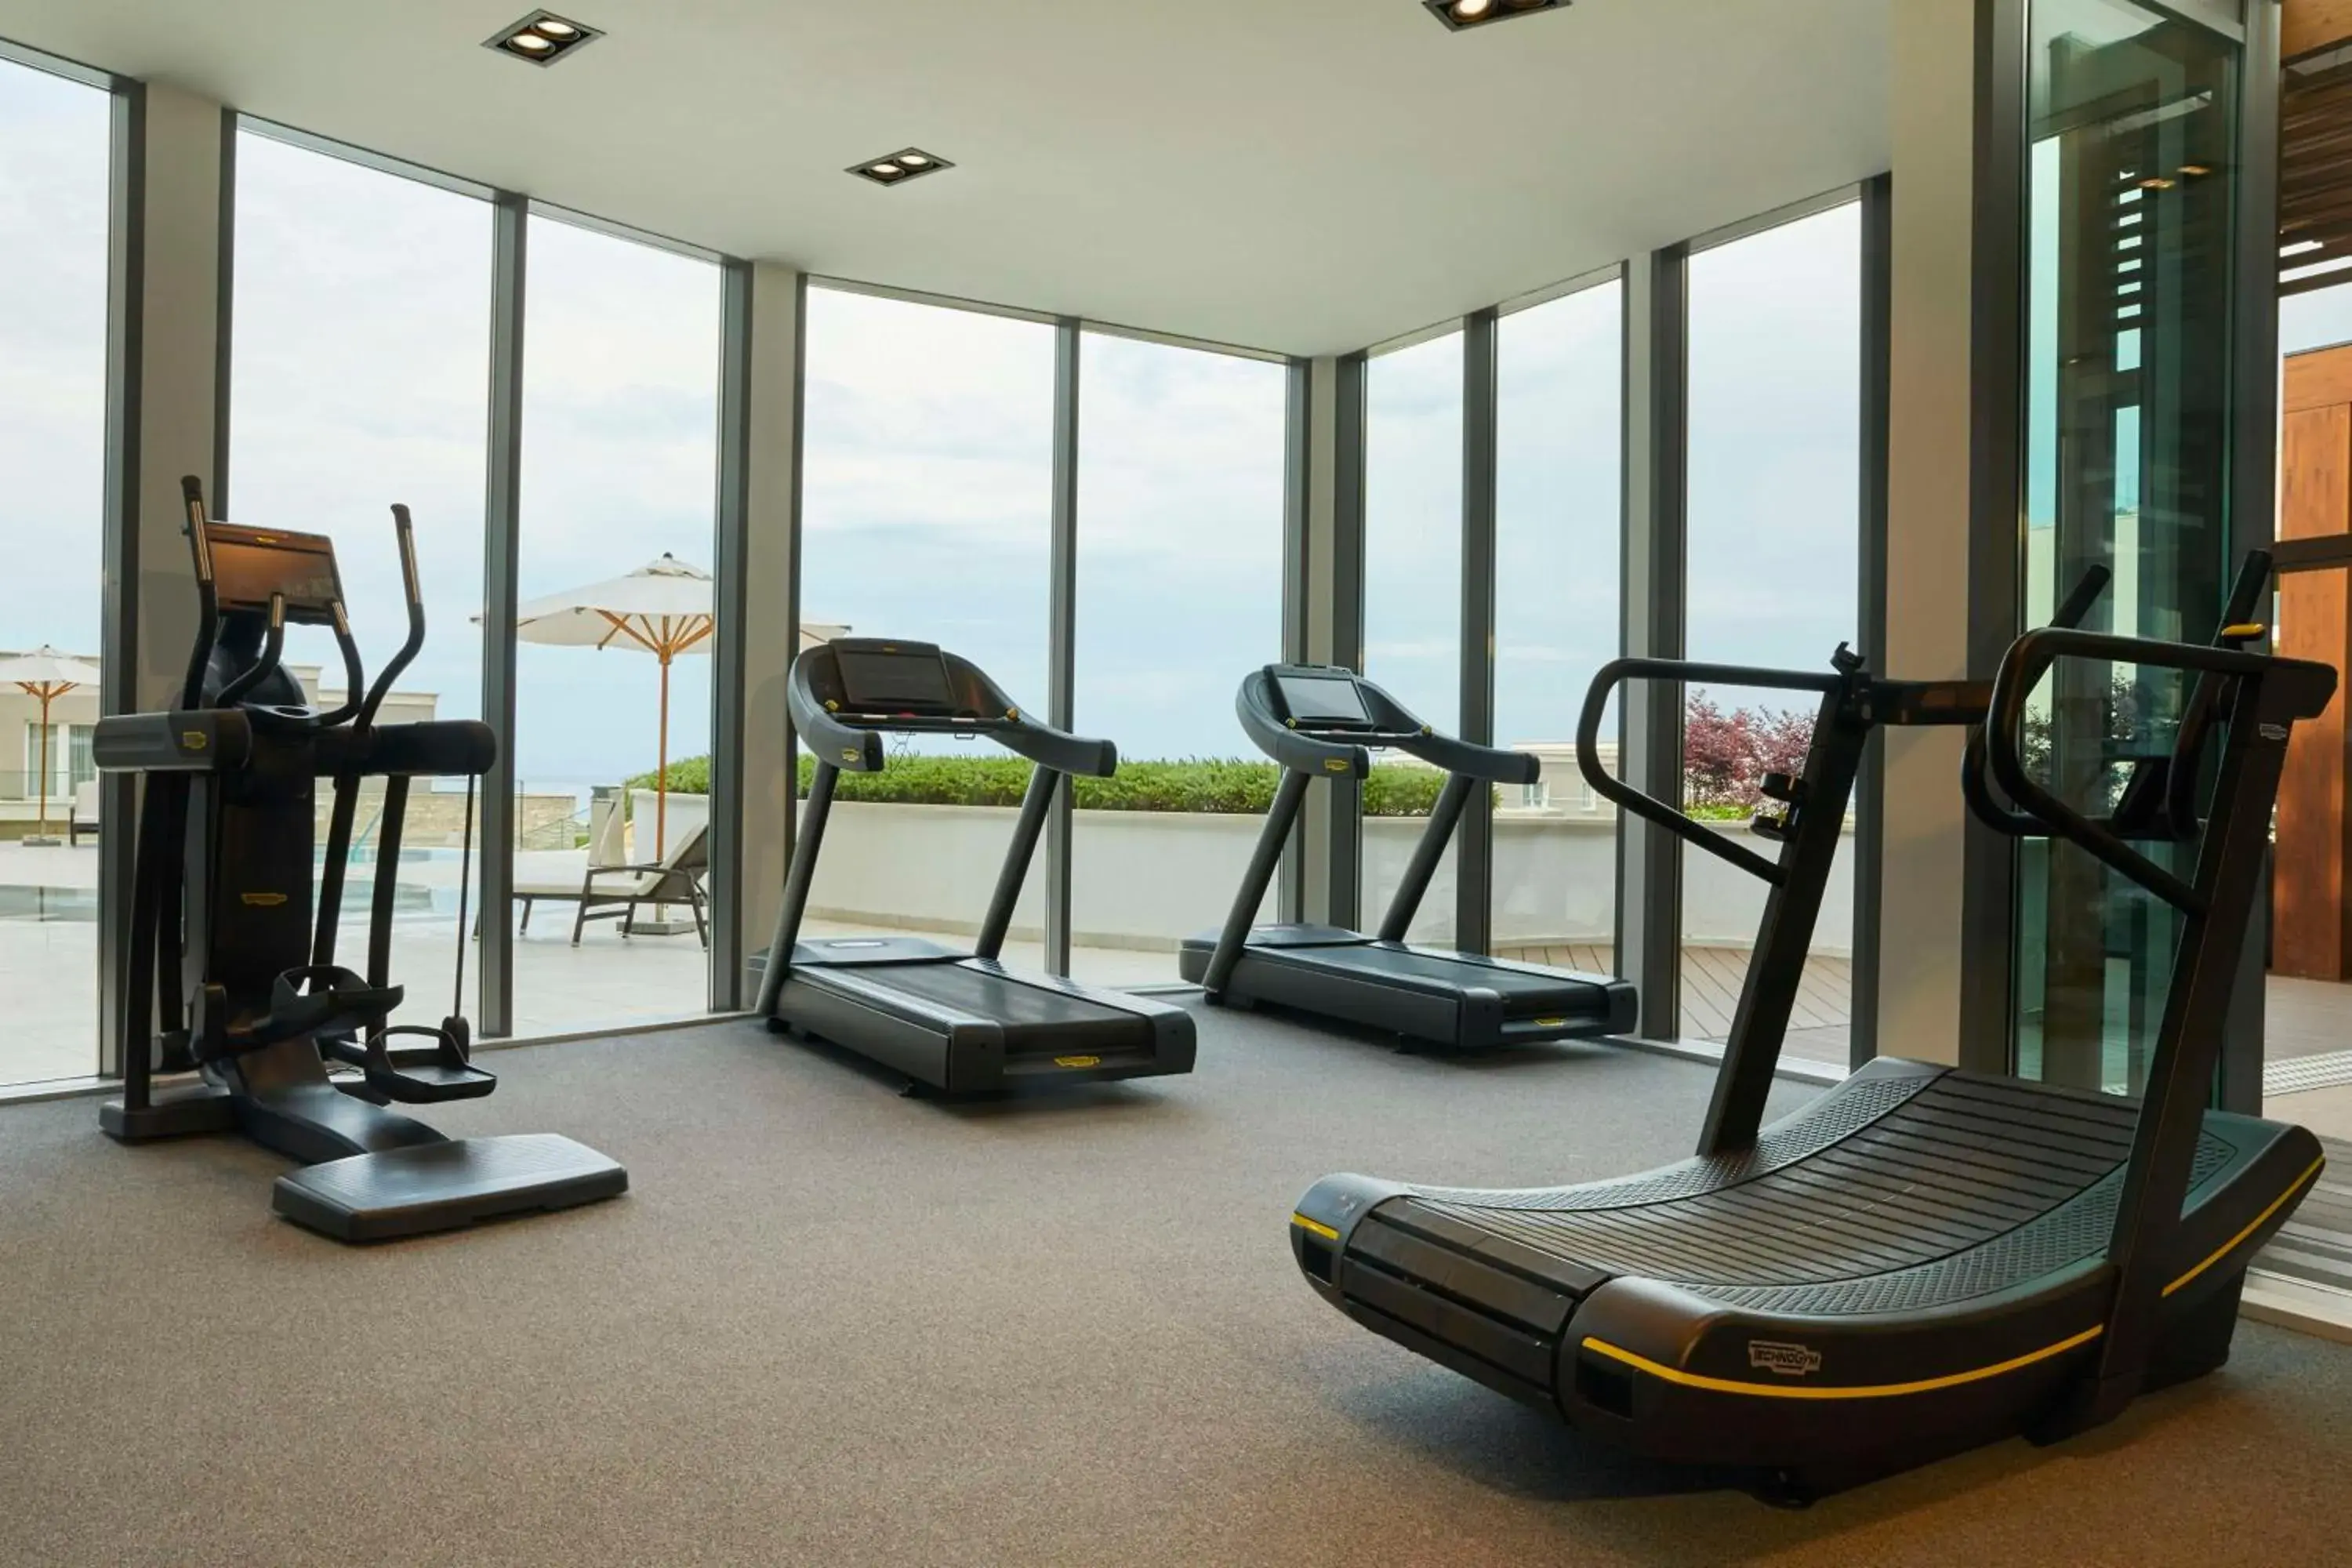 Fitness centre/facilities, Fitness Center/Facilities in Kempinski Hotel Adriatic Istria Croatia